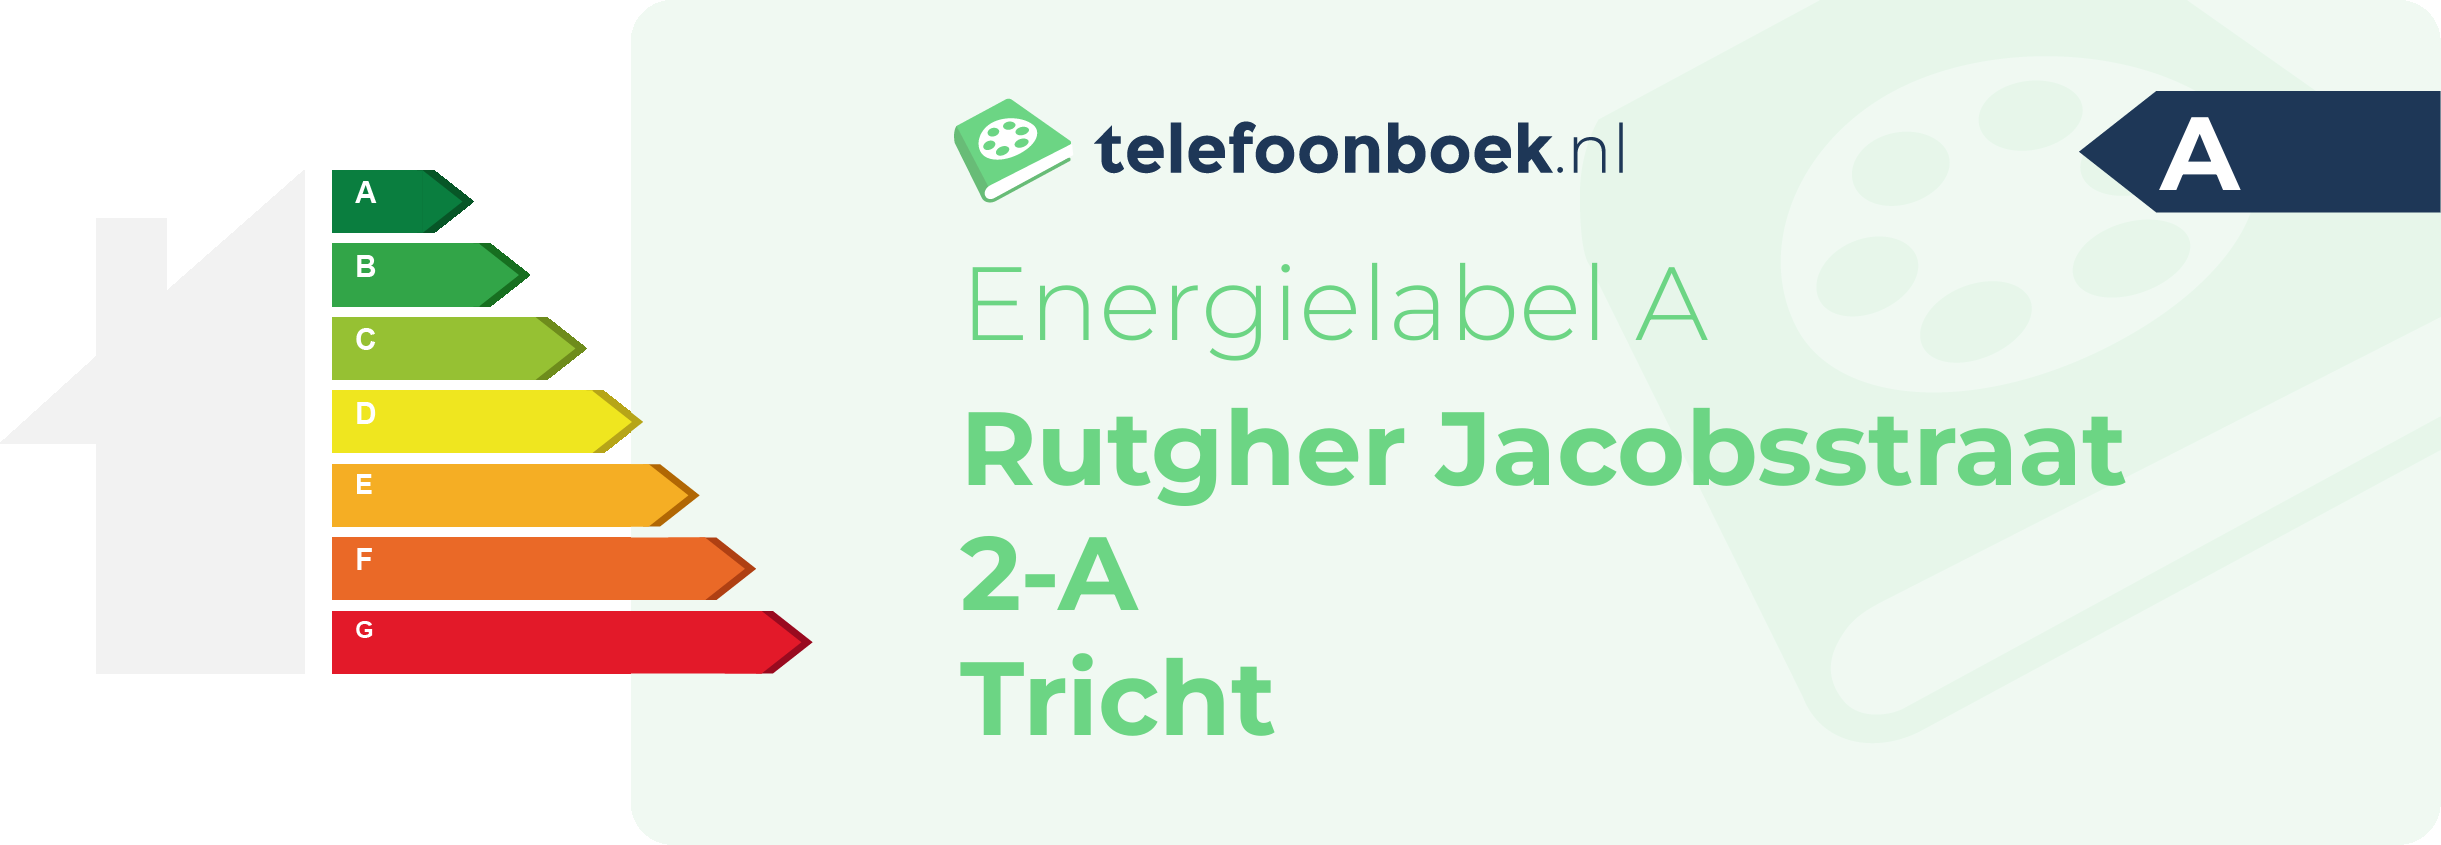 Energielabel Rutgher Jacobsstraat 2-A Tricht